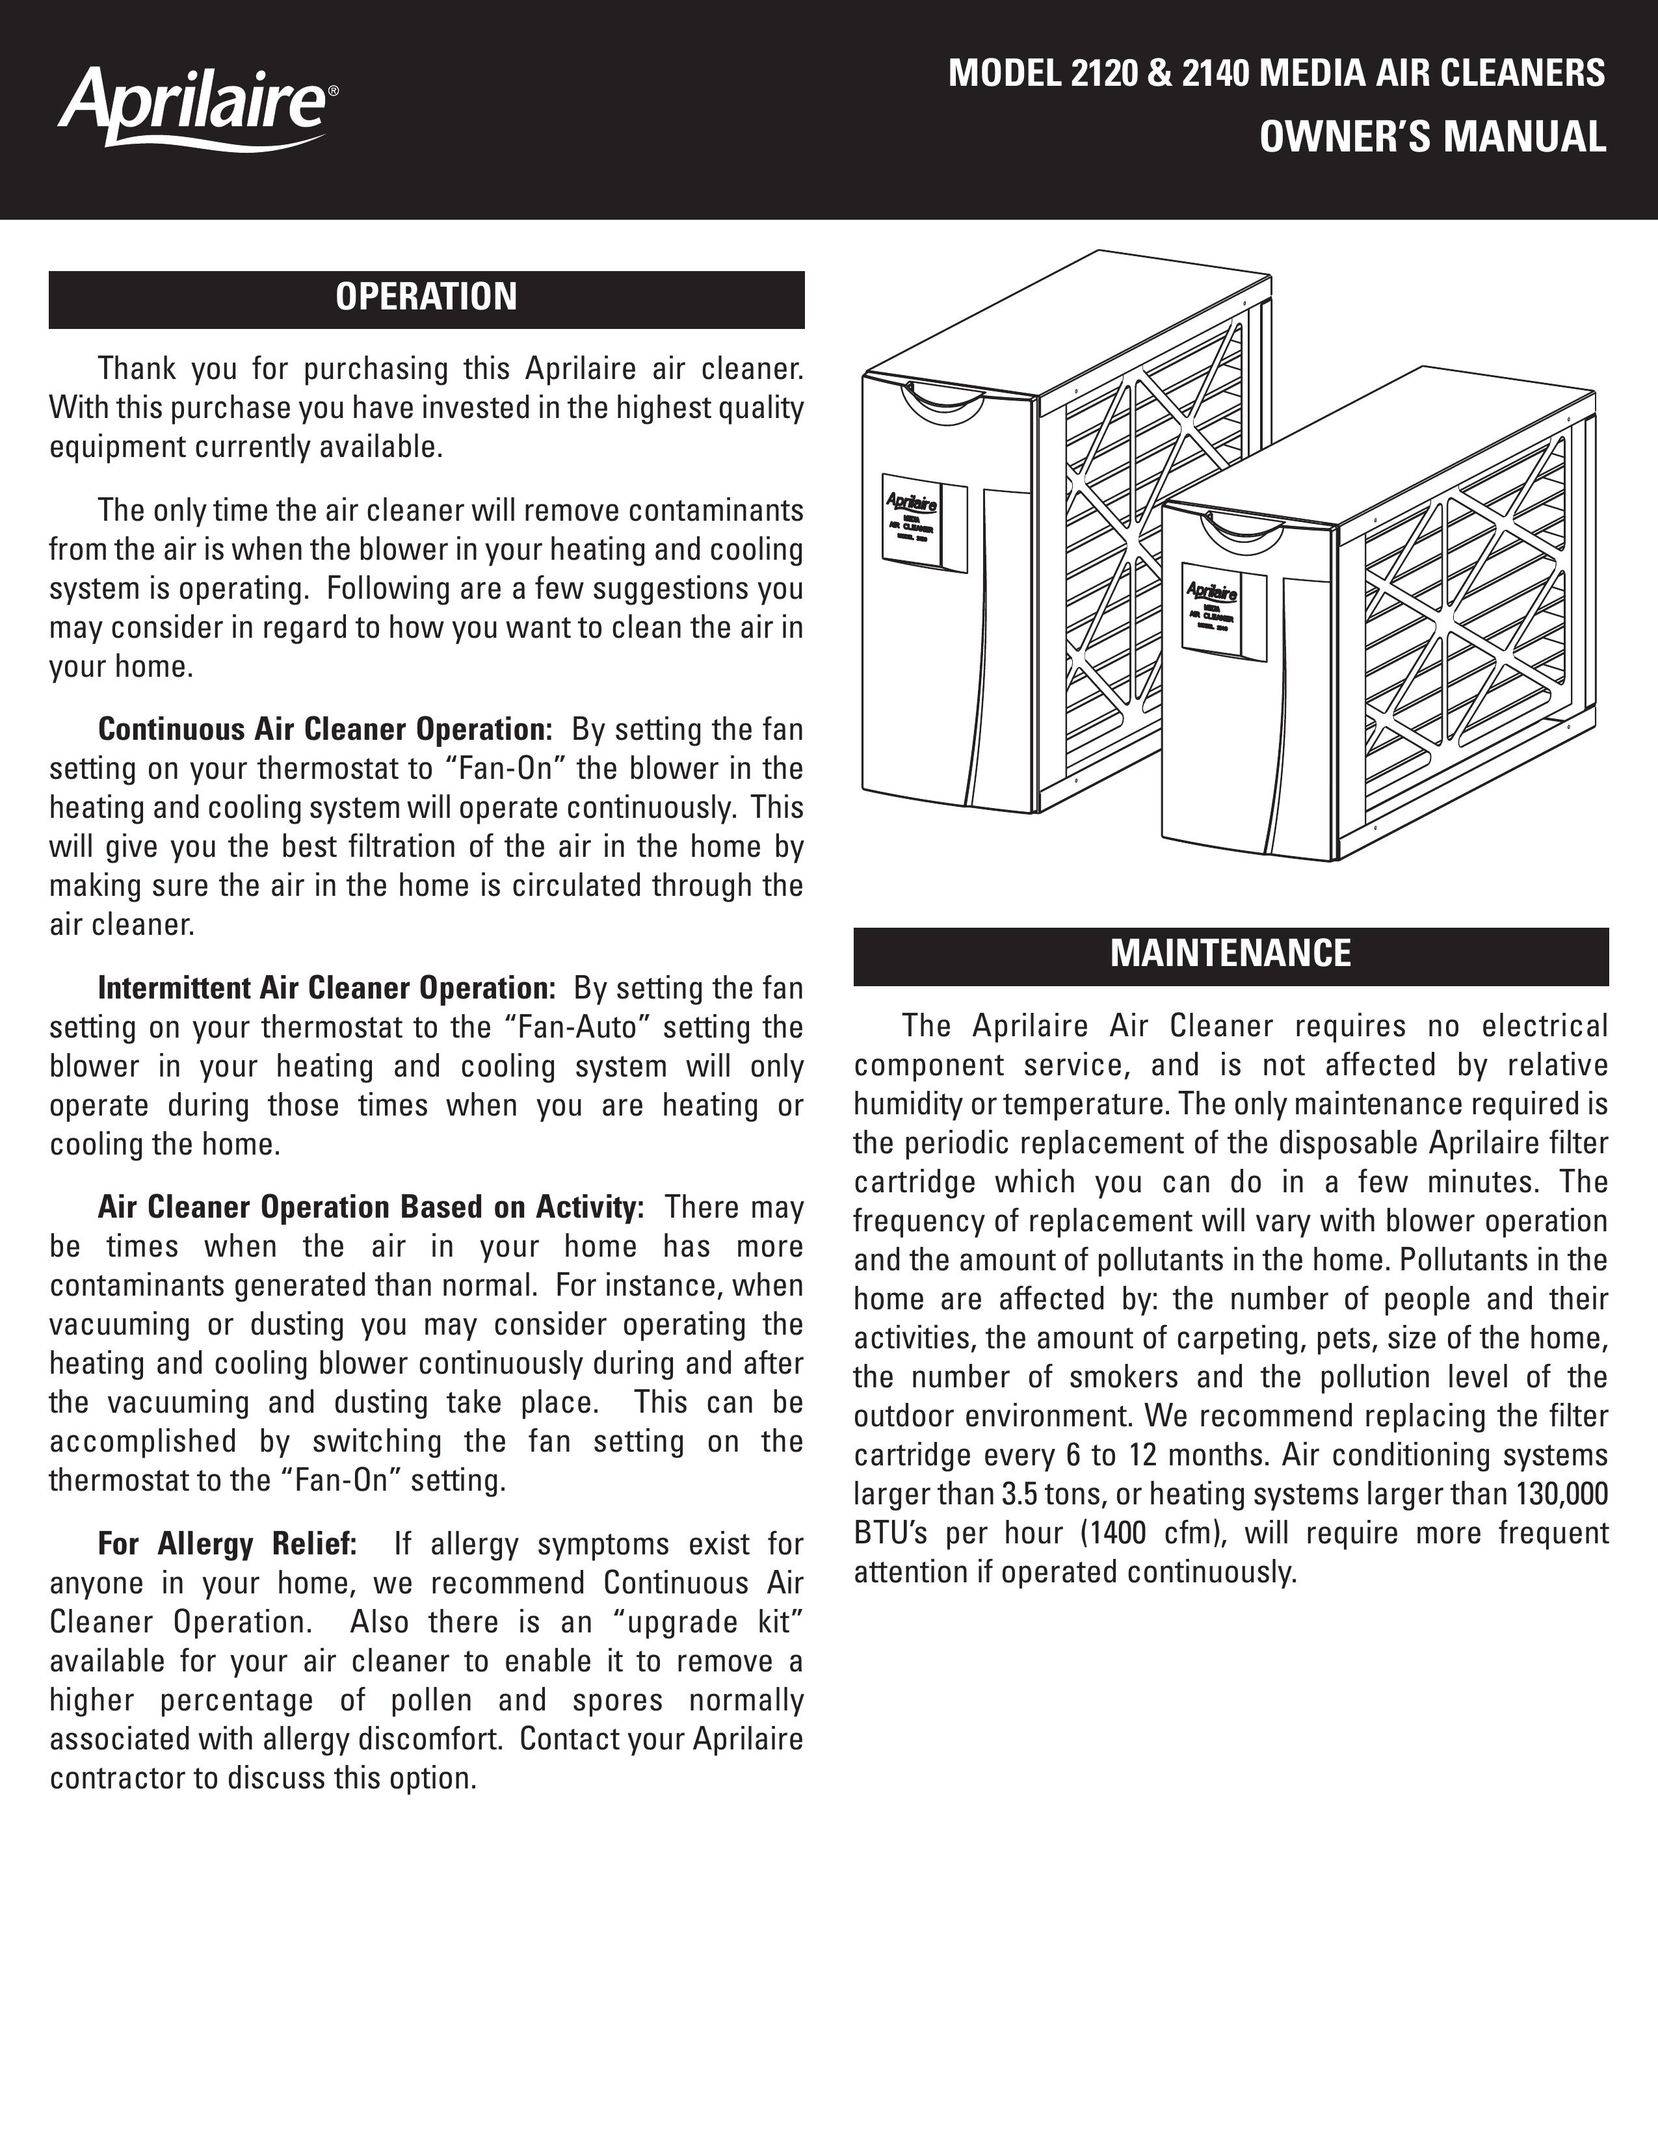 Aprilaire 2120 Air Cleaner User Manual